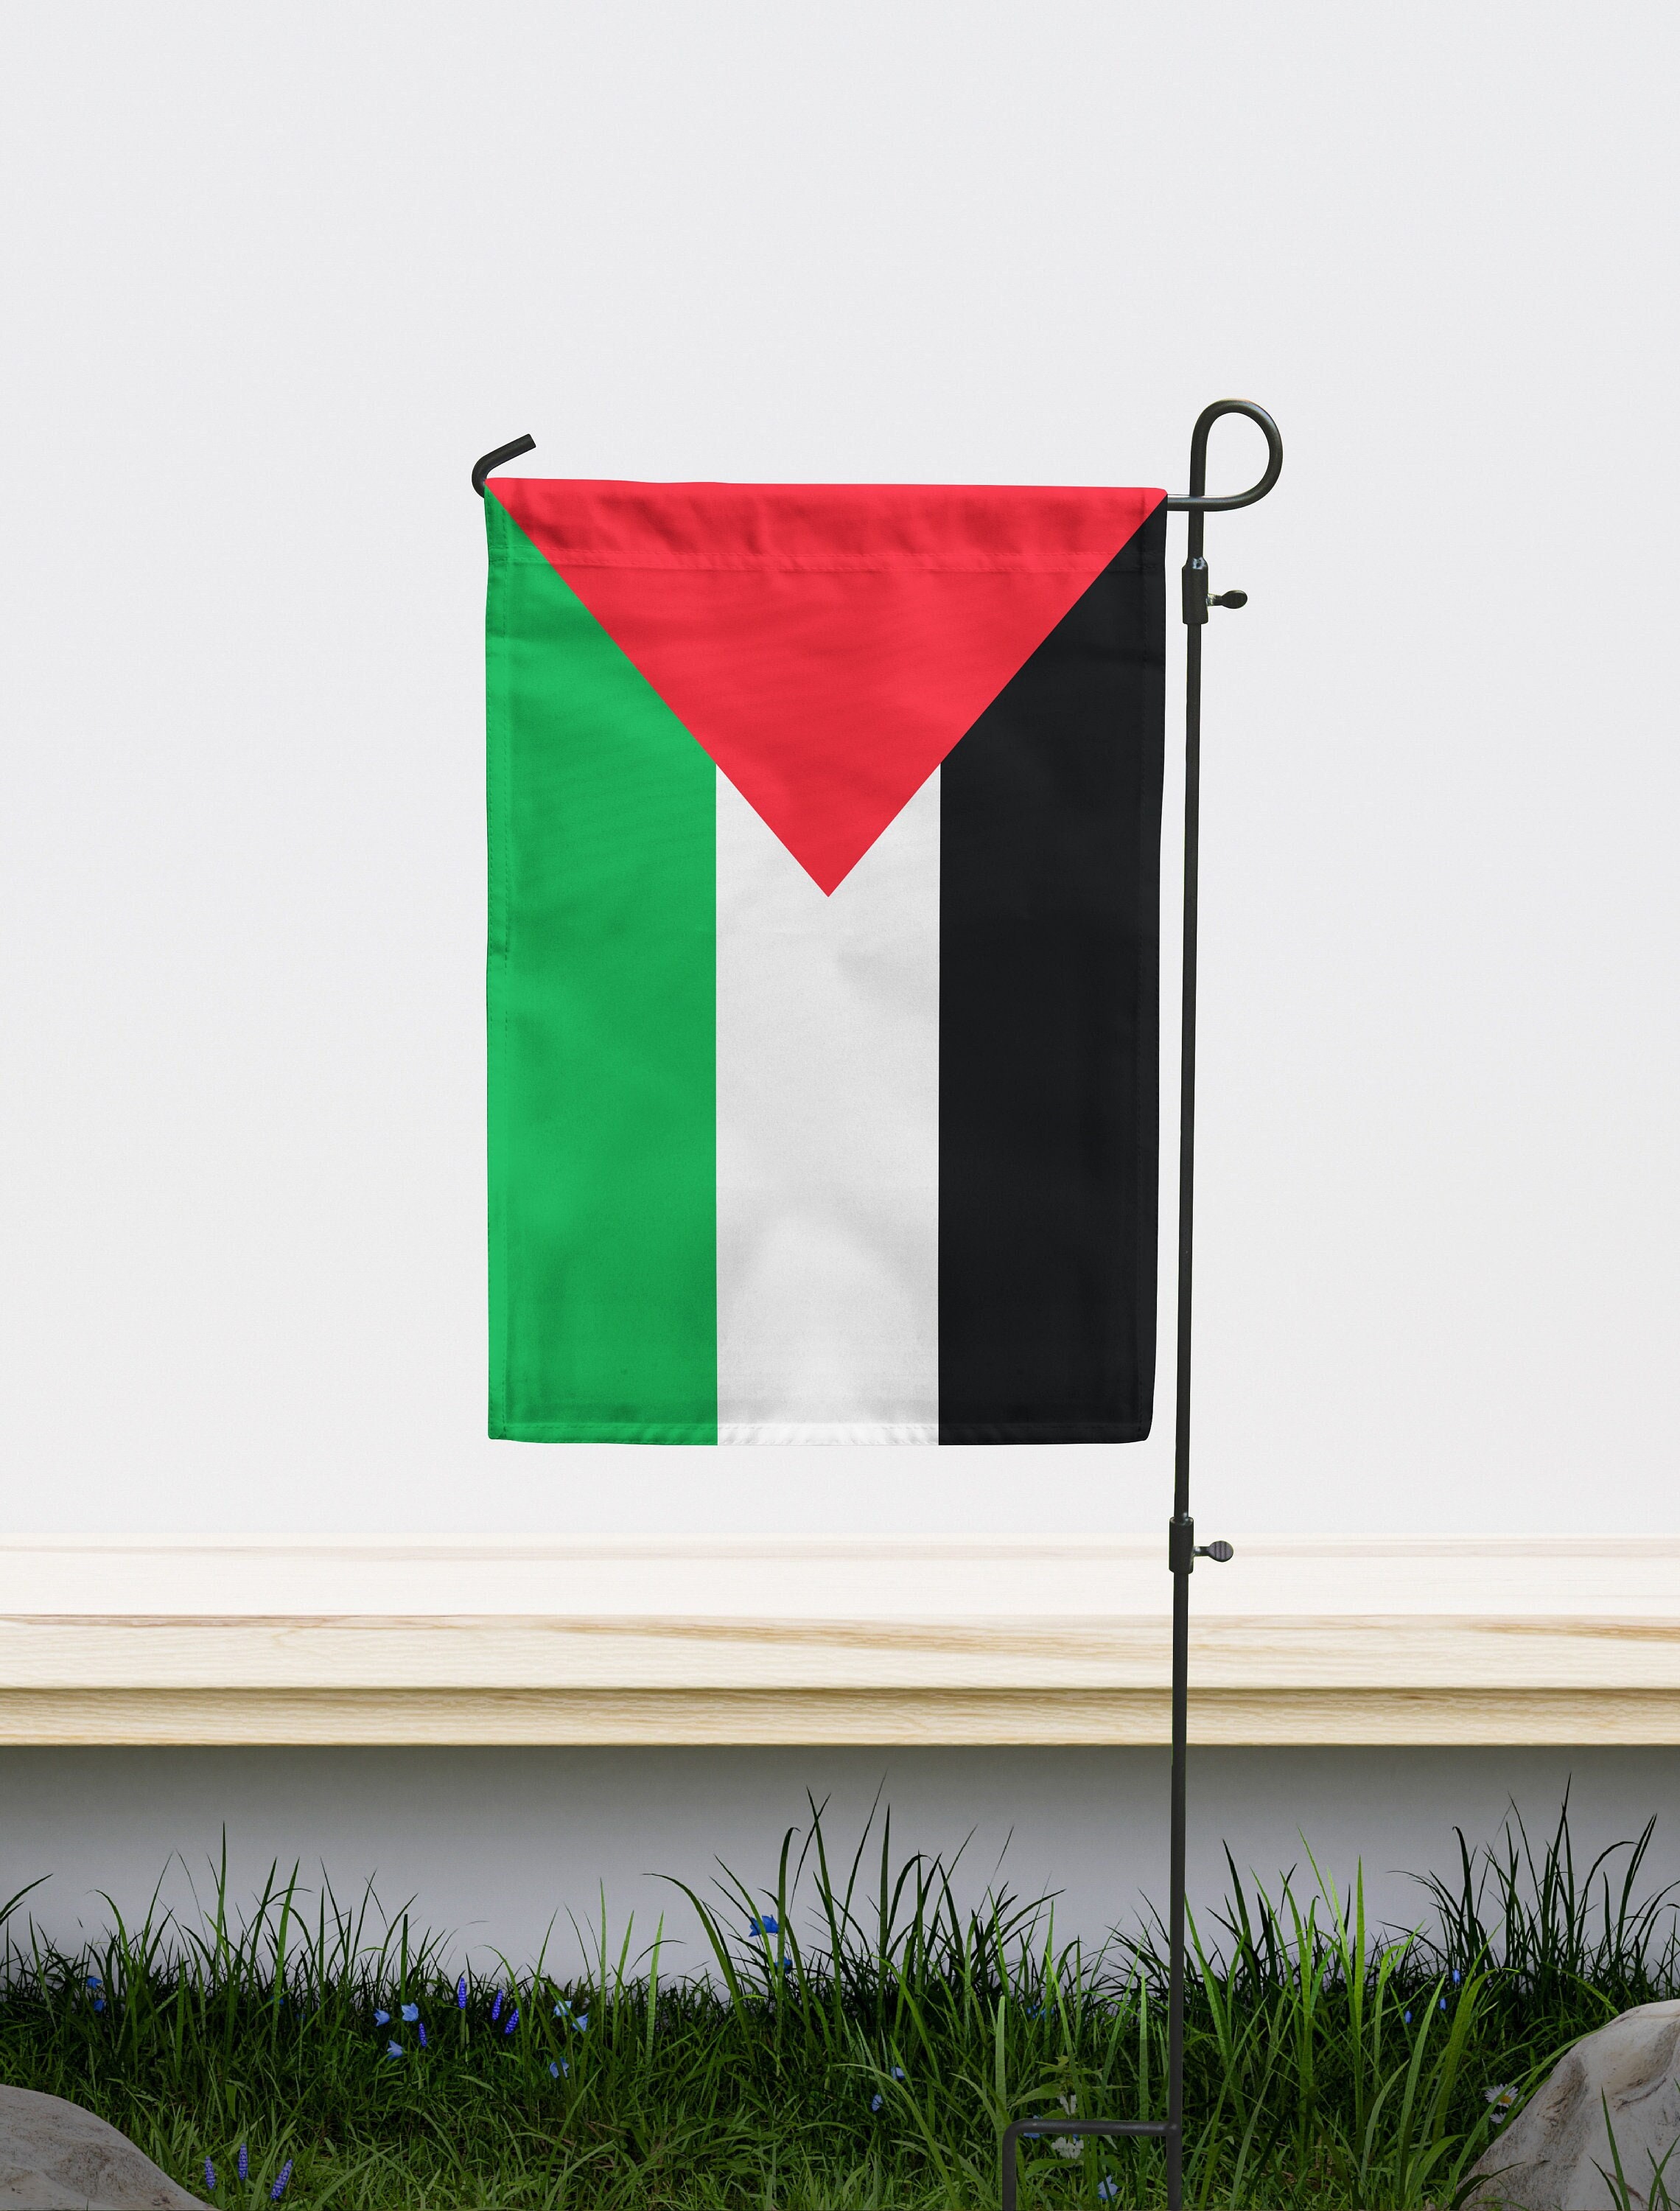 Palästina Flagge 90 x 150 cm, Palestine Flagge 3 x 5 ft